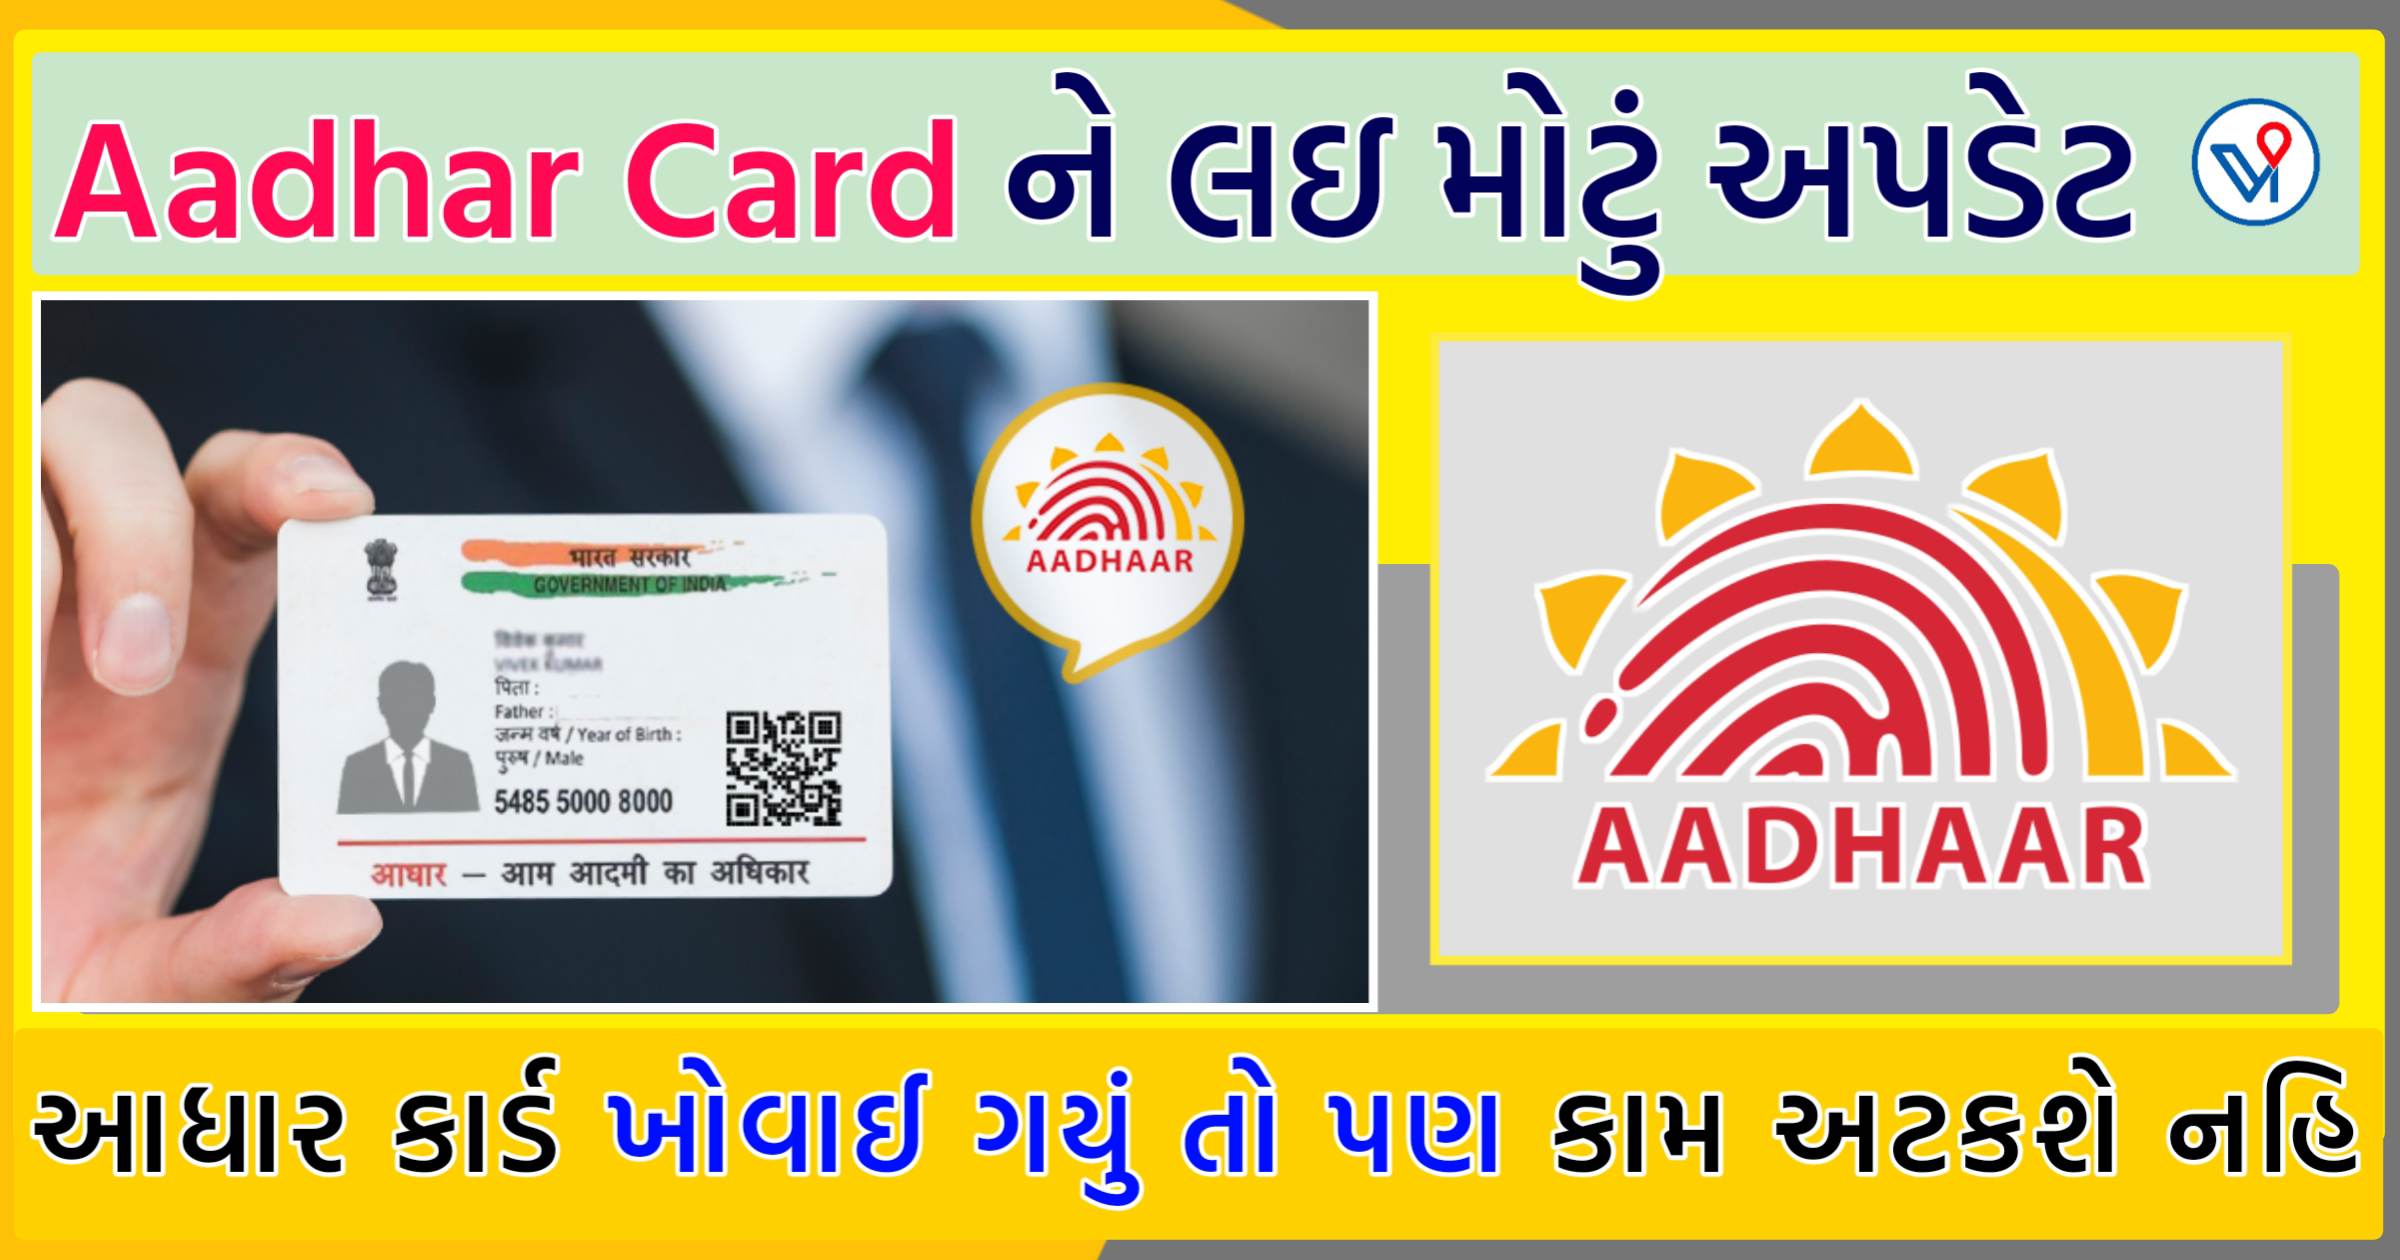 Aadhaar Card ને લઈ મોટું અપડેટ, આધાર ખોવાઈ જાય તો પણ તમારું કામ અટકશે નહીં